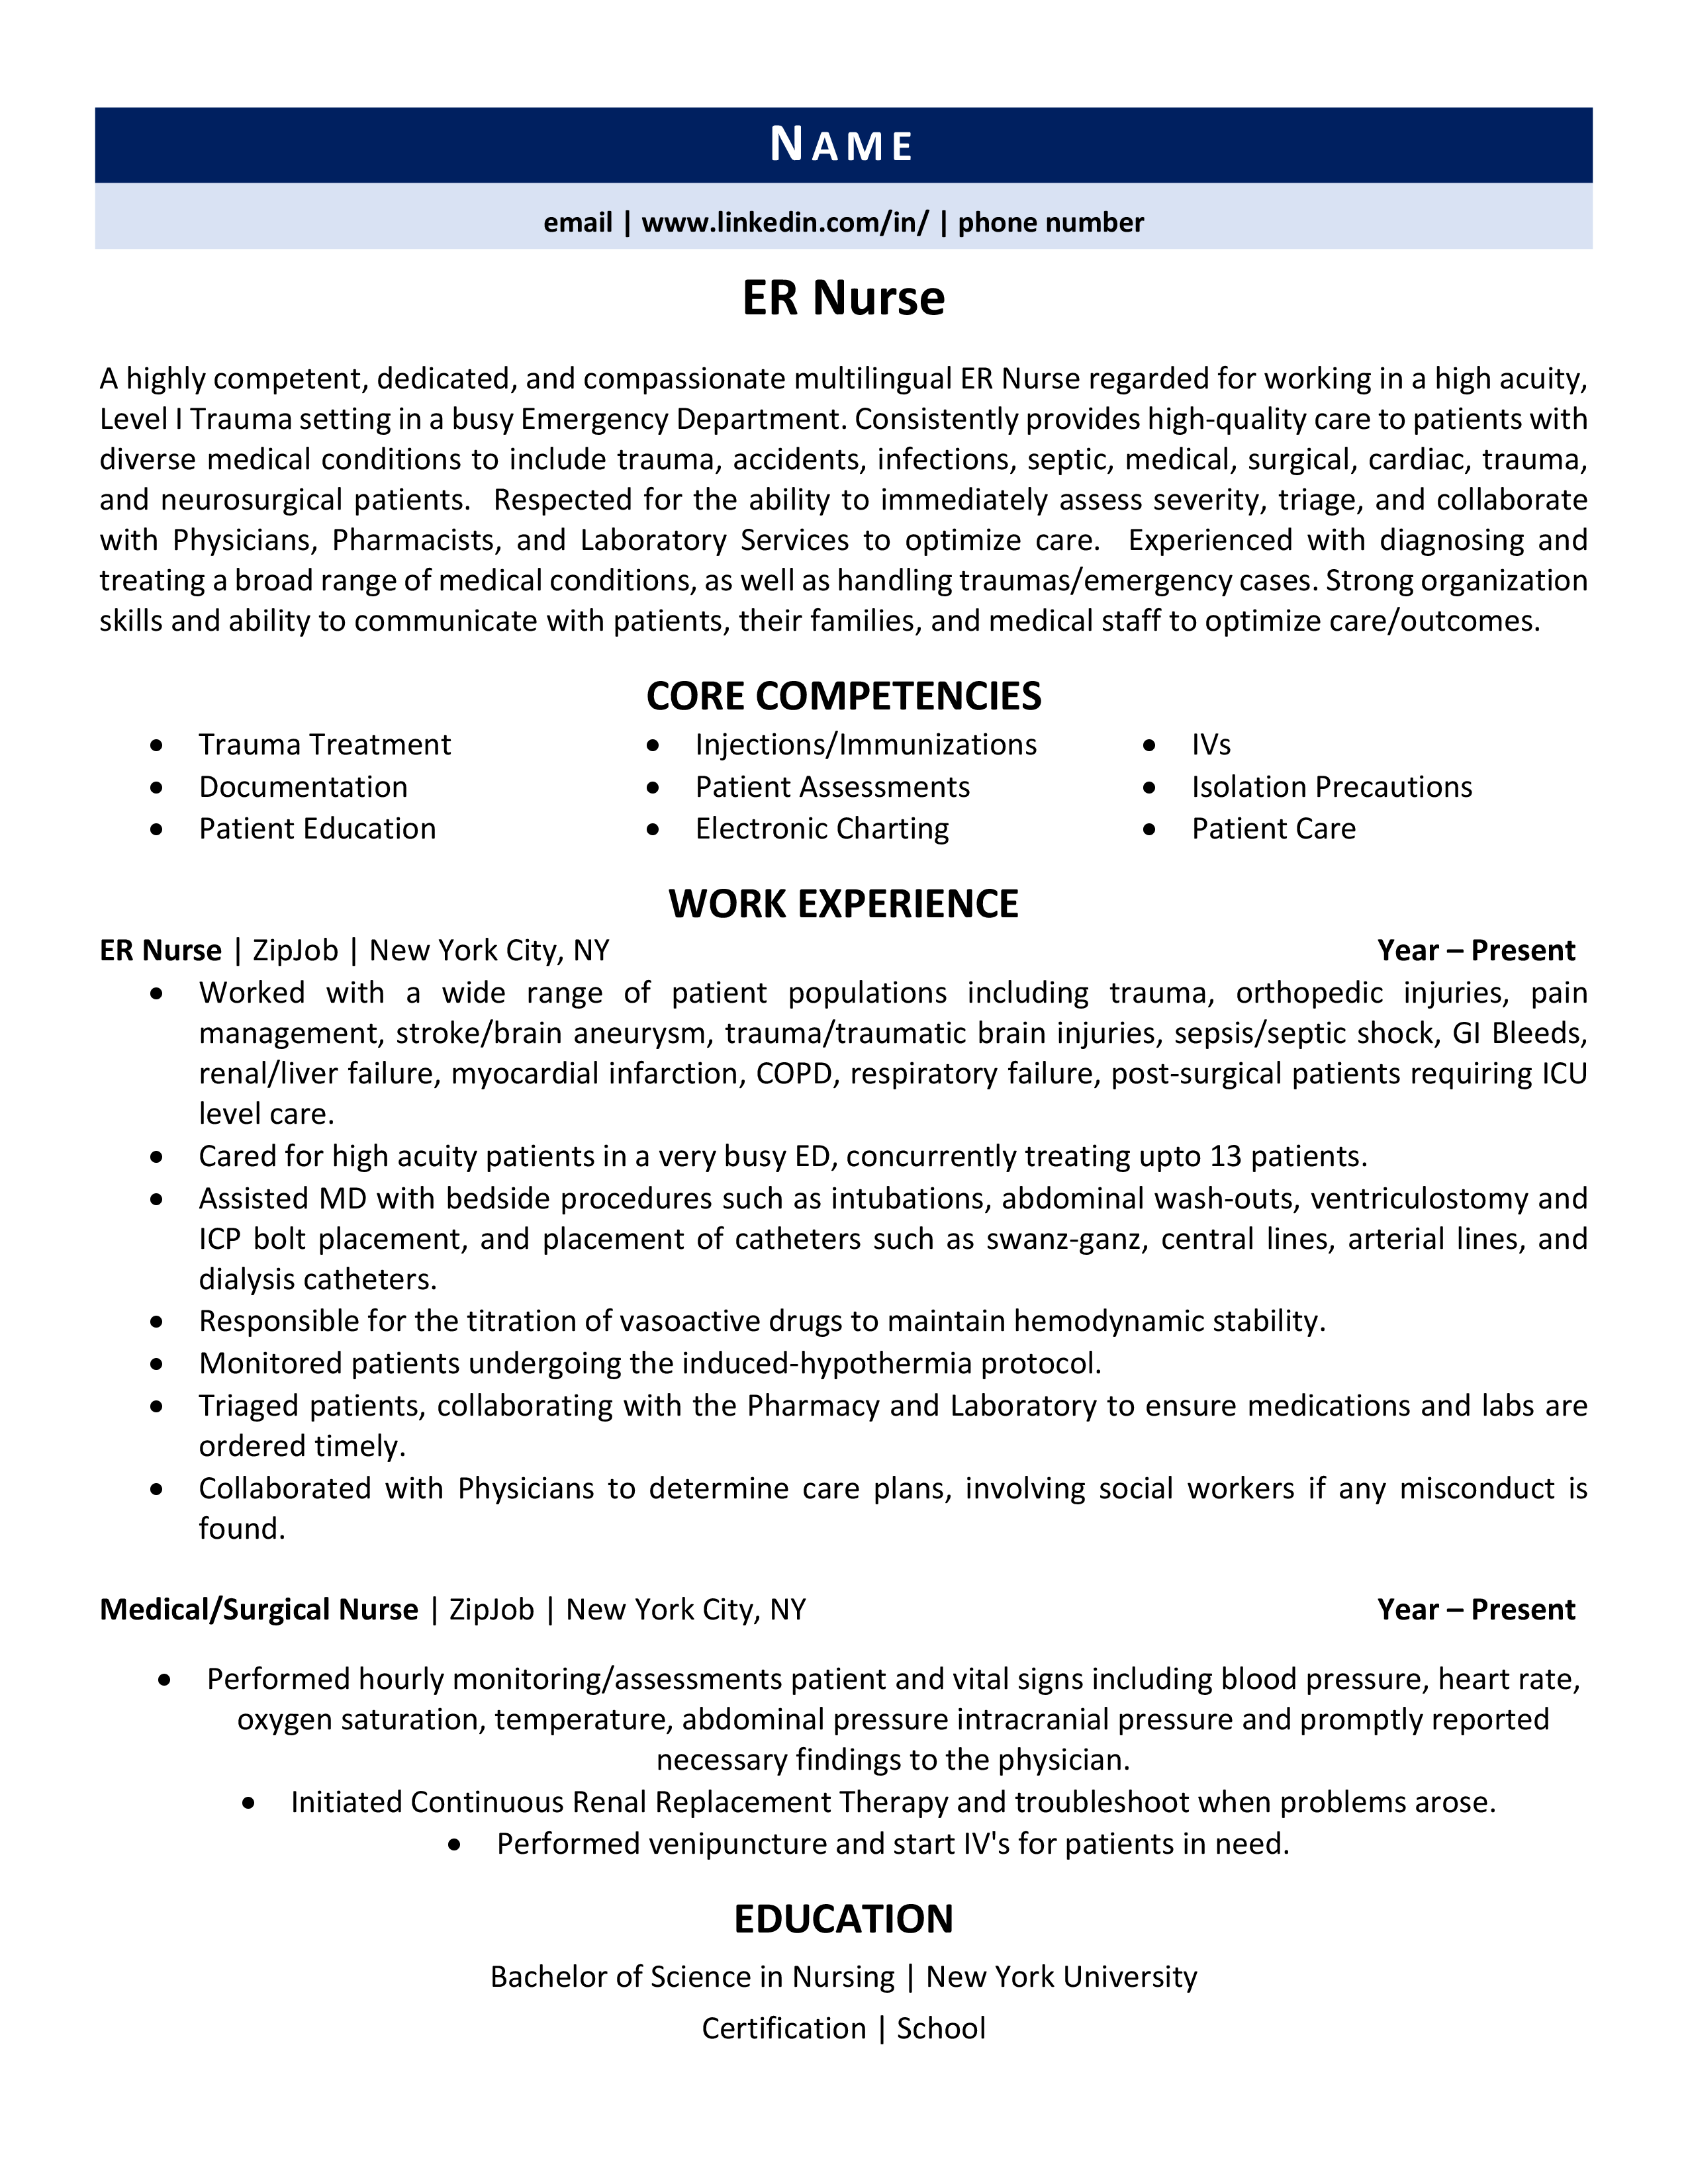 nursing resume templates for microsoft word